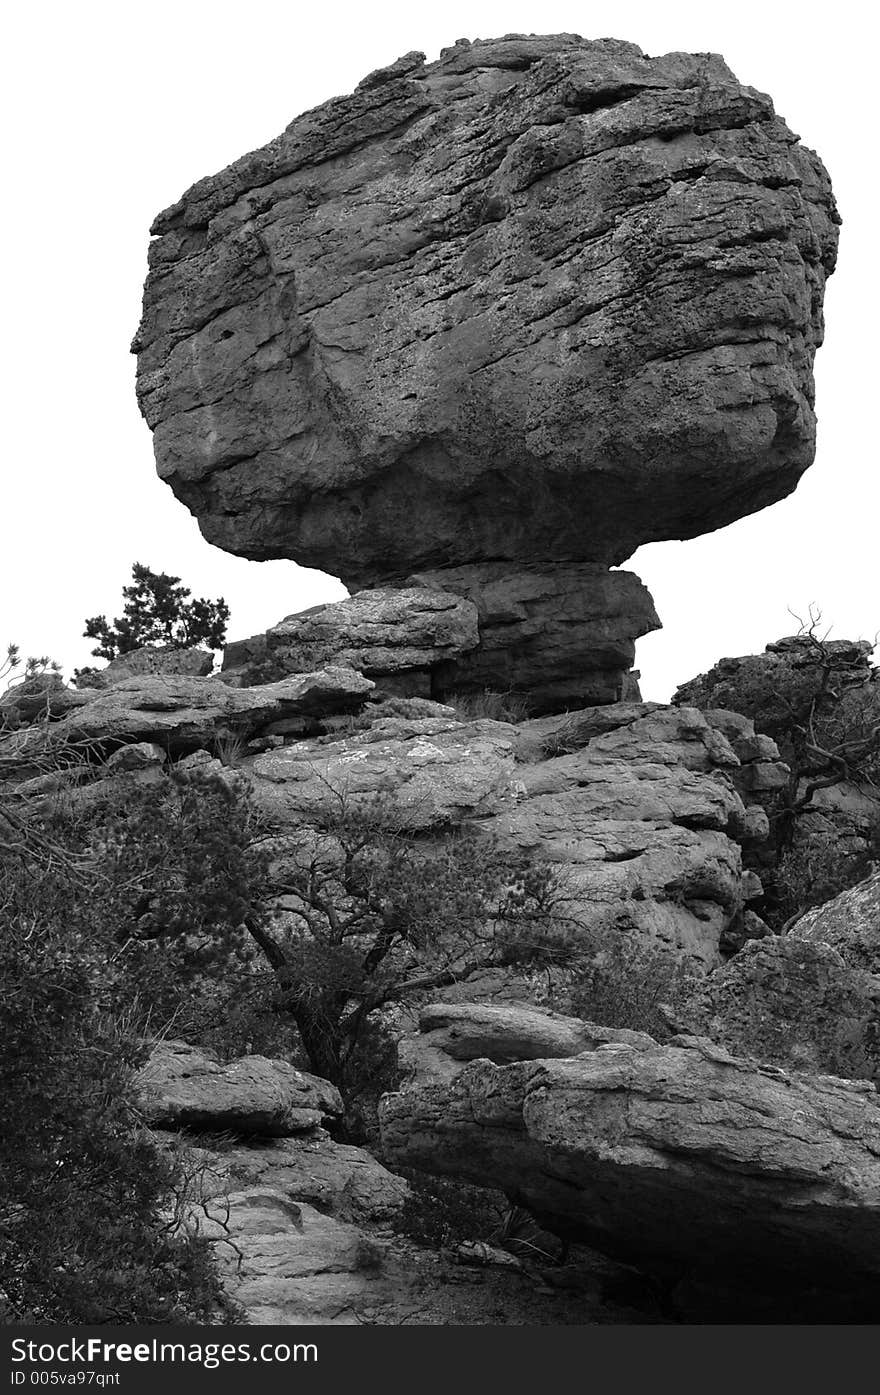 Balanced rock in the Chiricahua Mts of Arizona